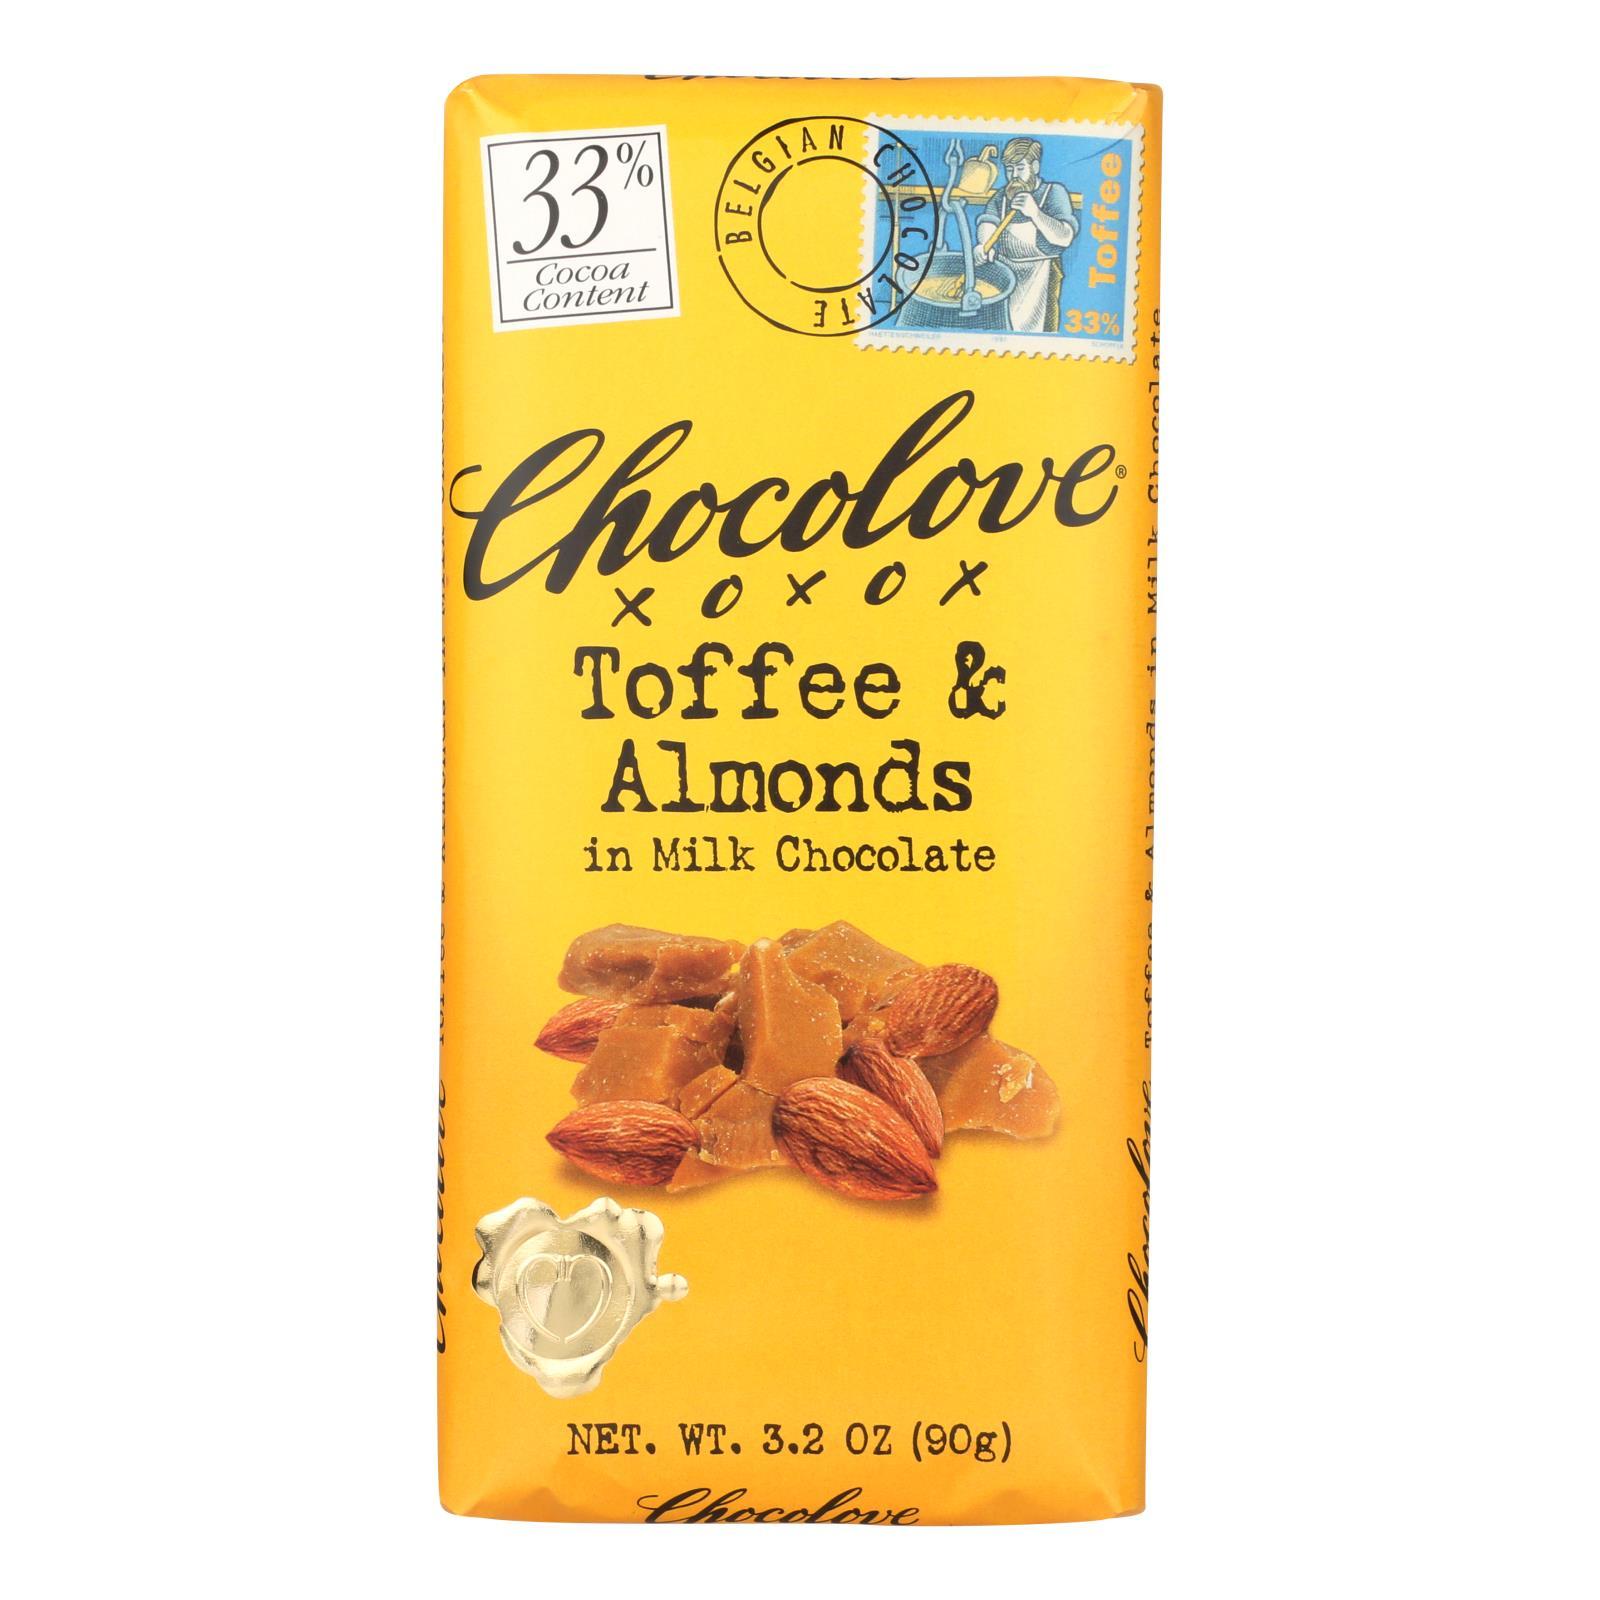 Chocolove Toffee & Almonds in Milk Choc Bar 3.2oz